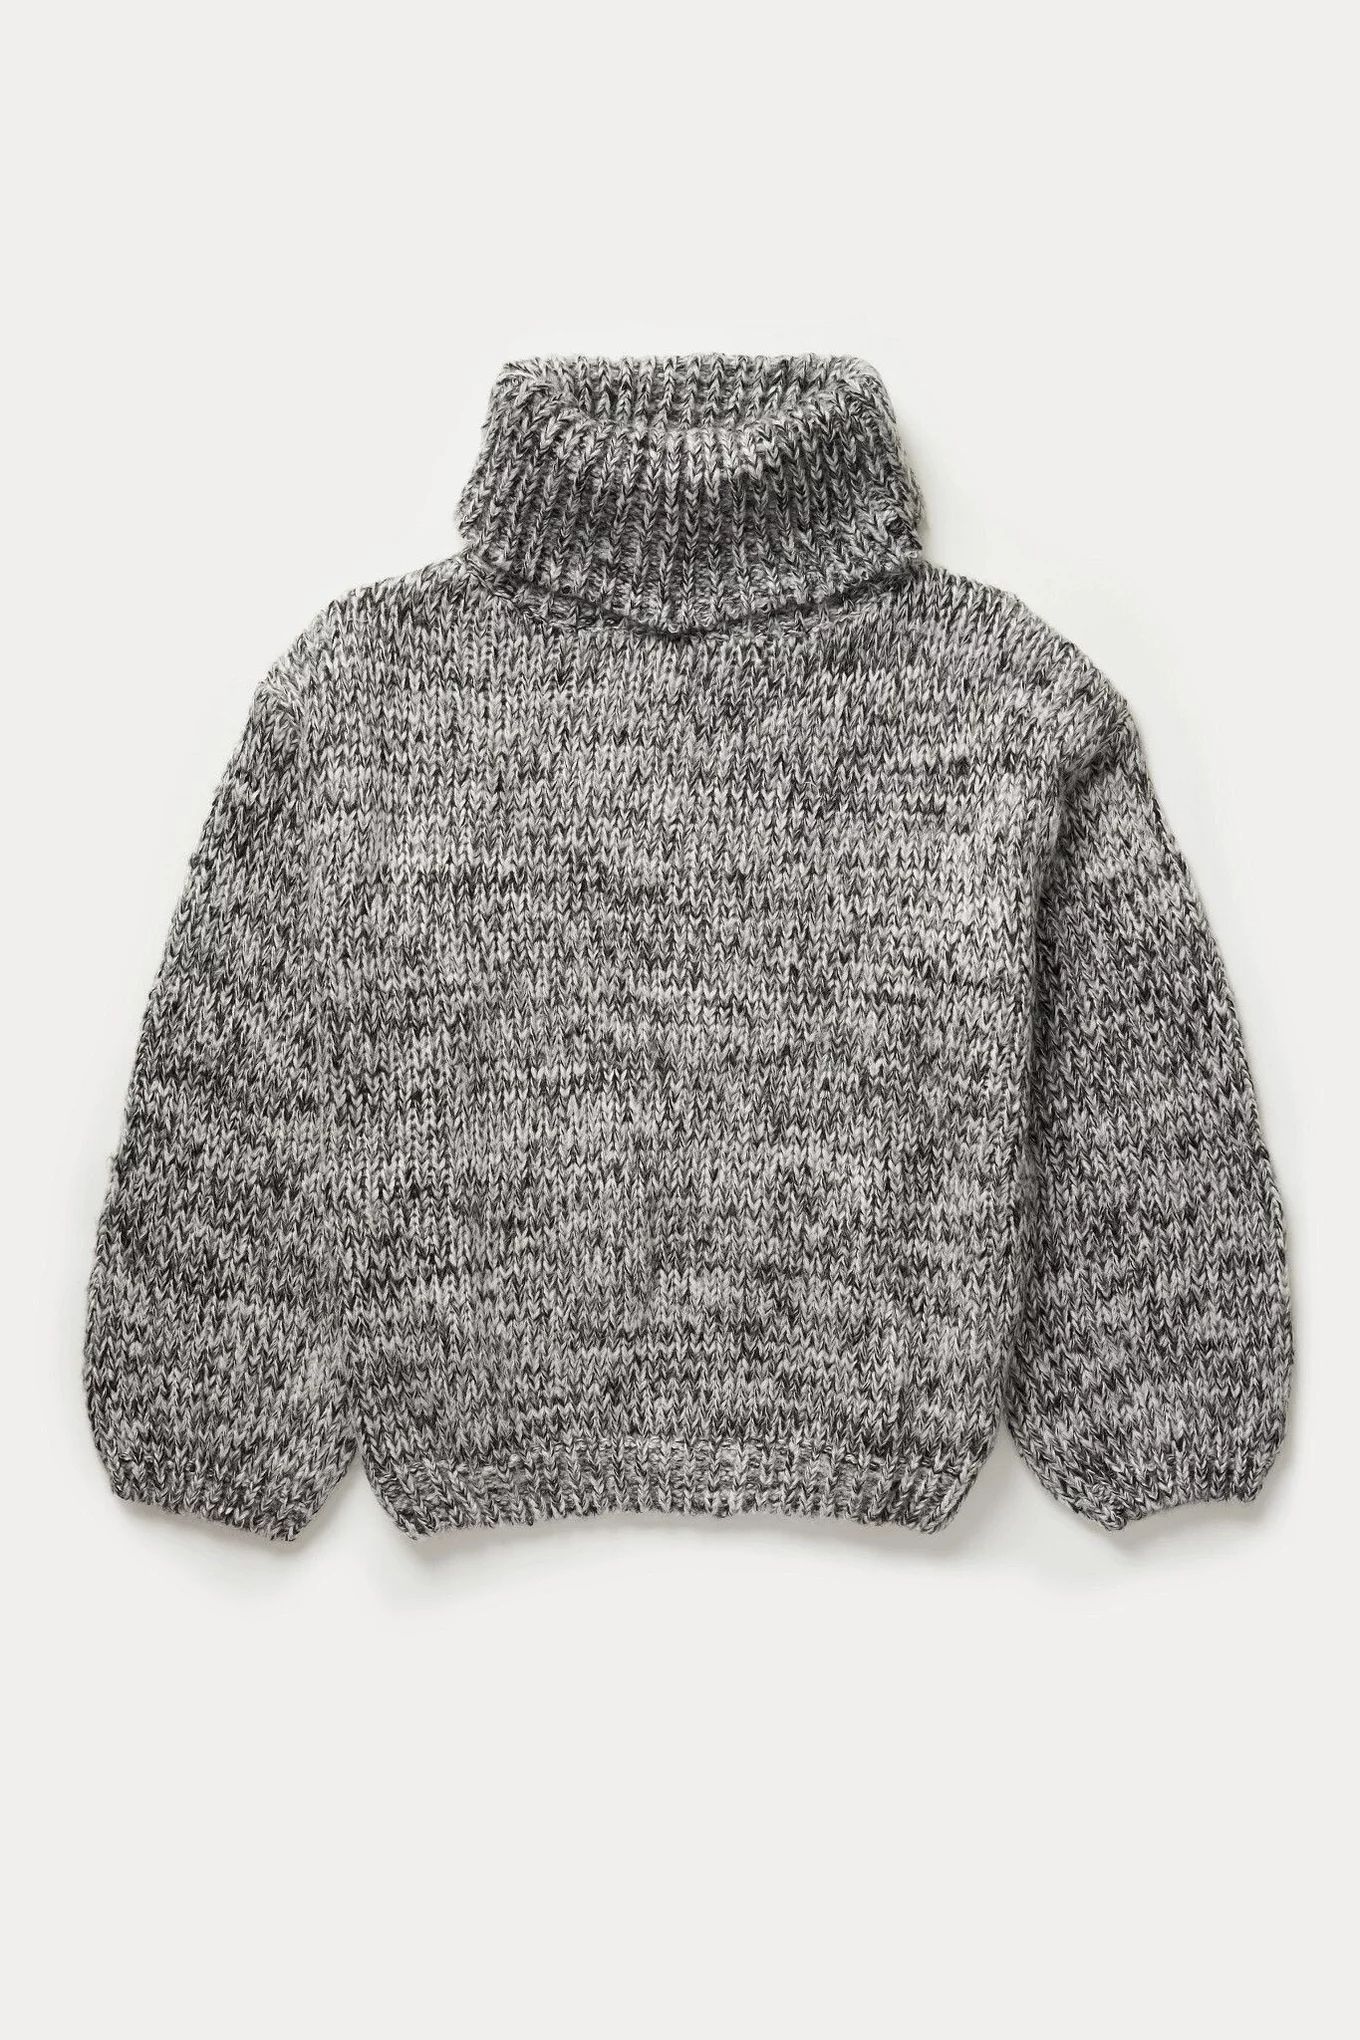 Seward Sweater | Adore Me